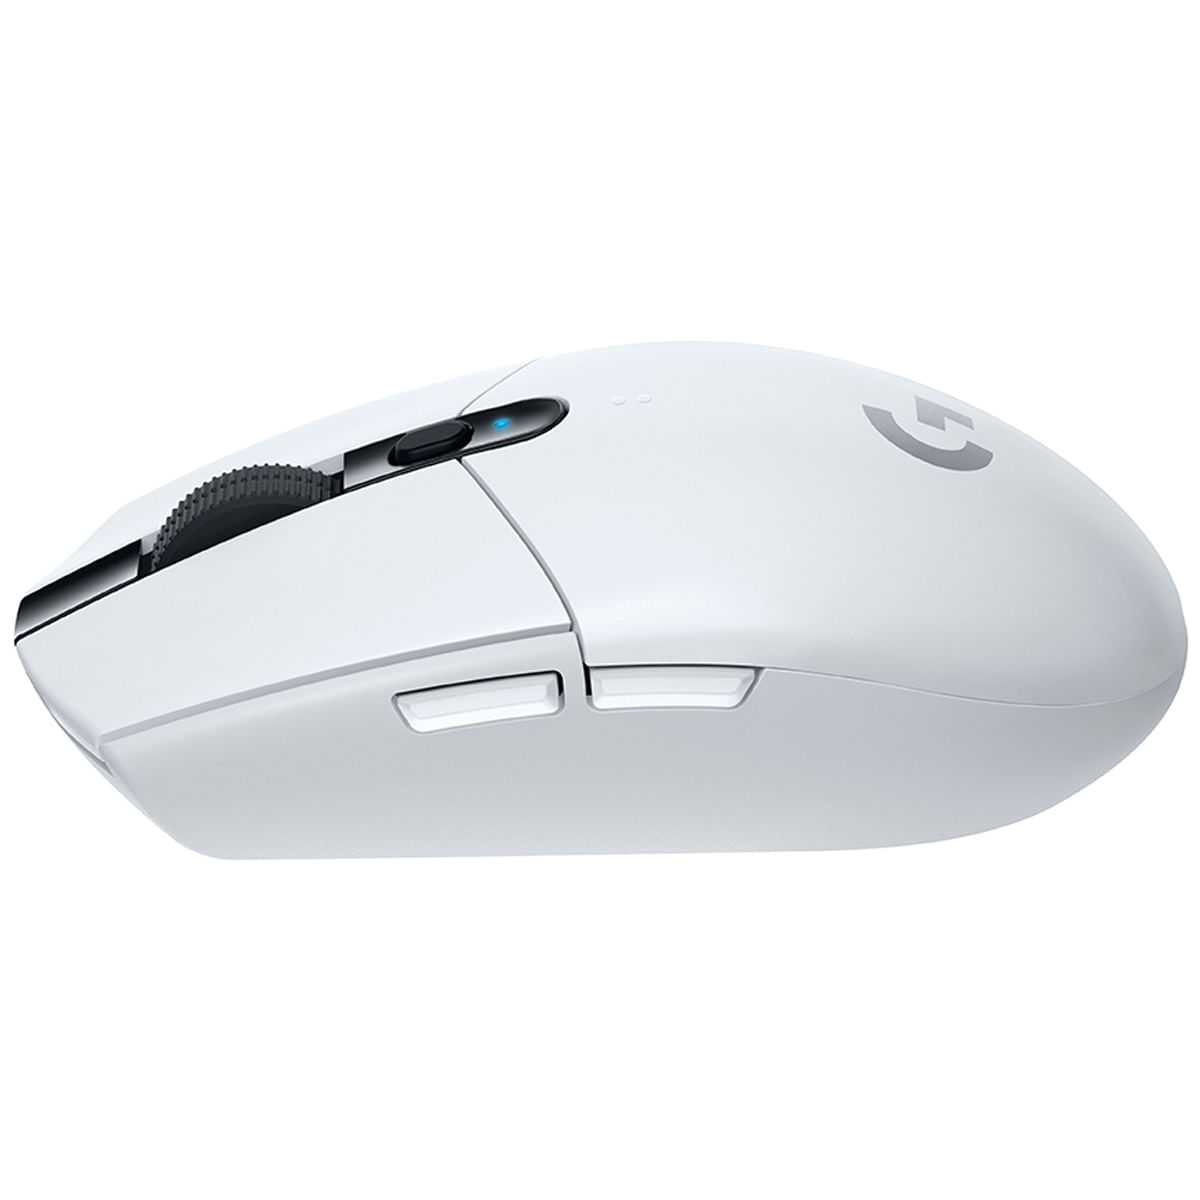 Mouse Gaming Logitech g305 Blanco